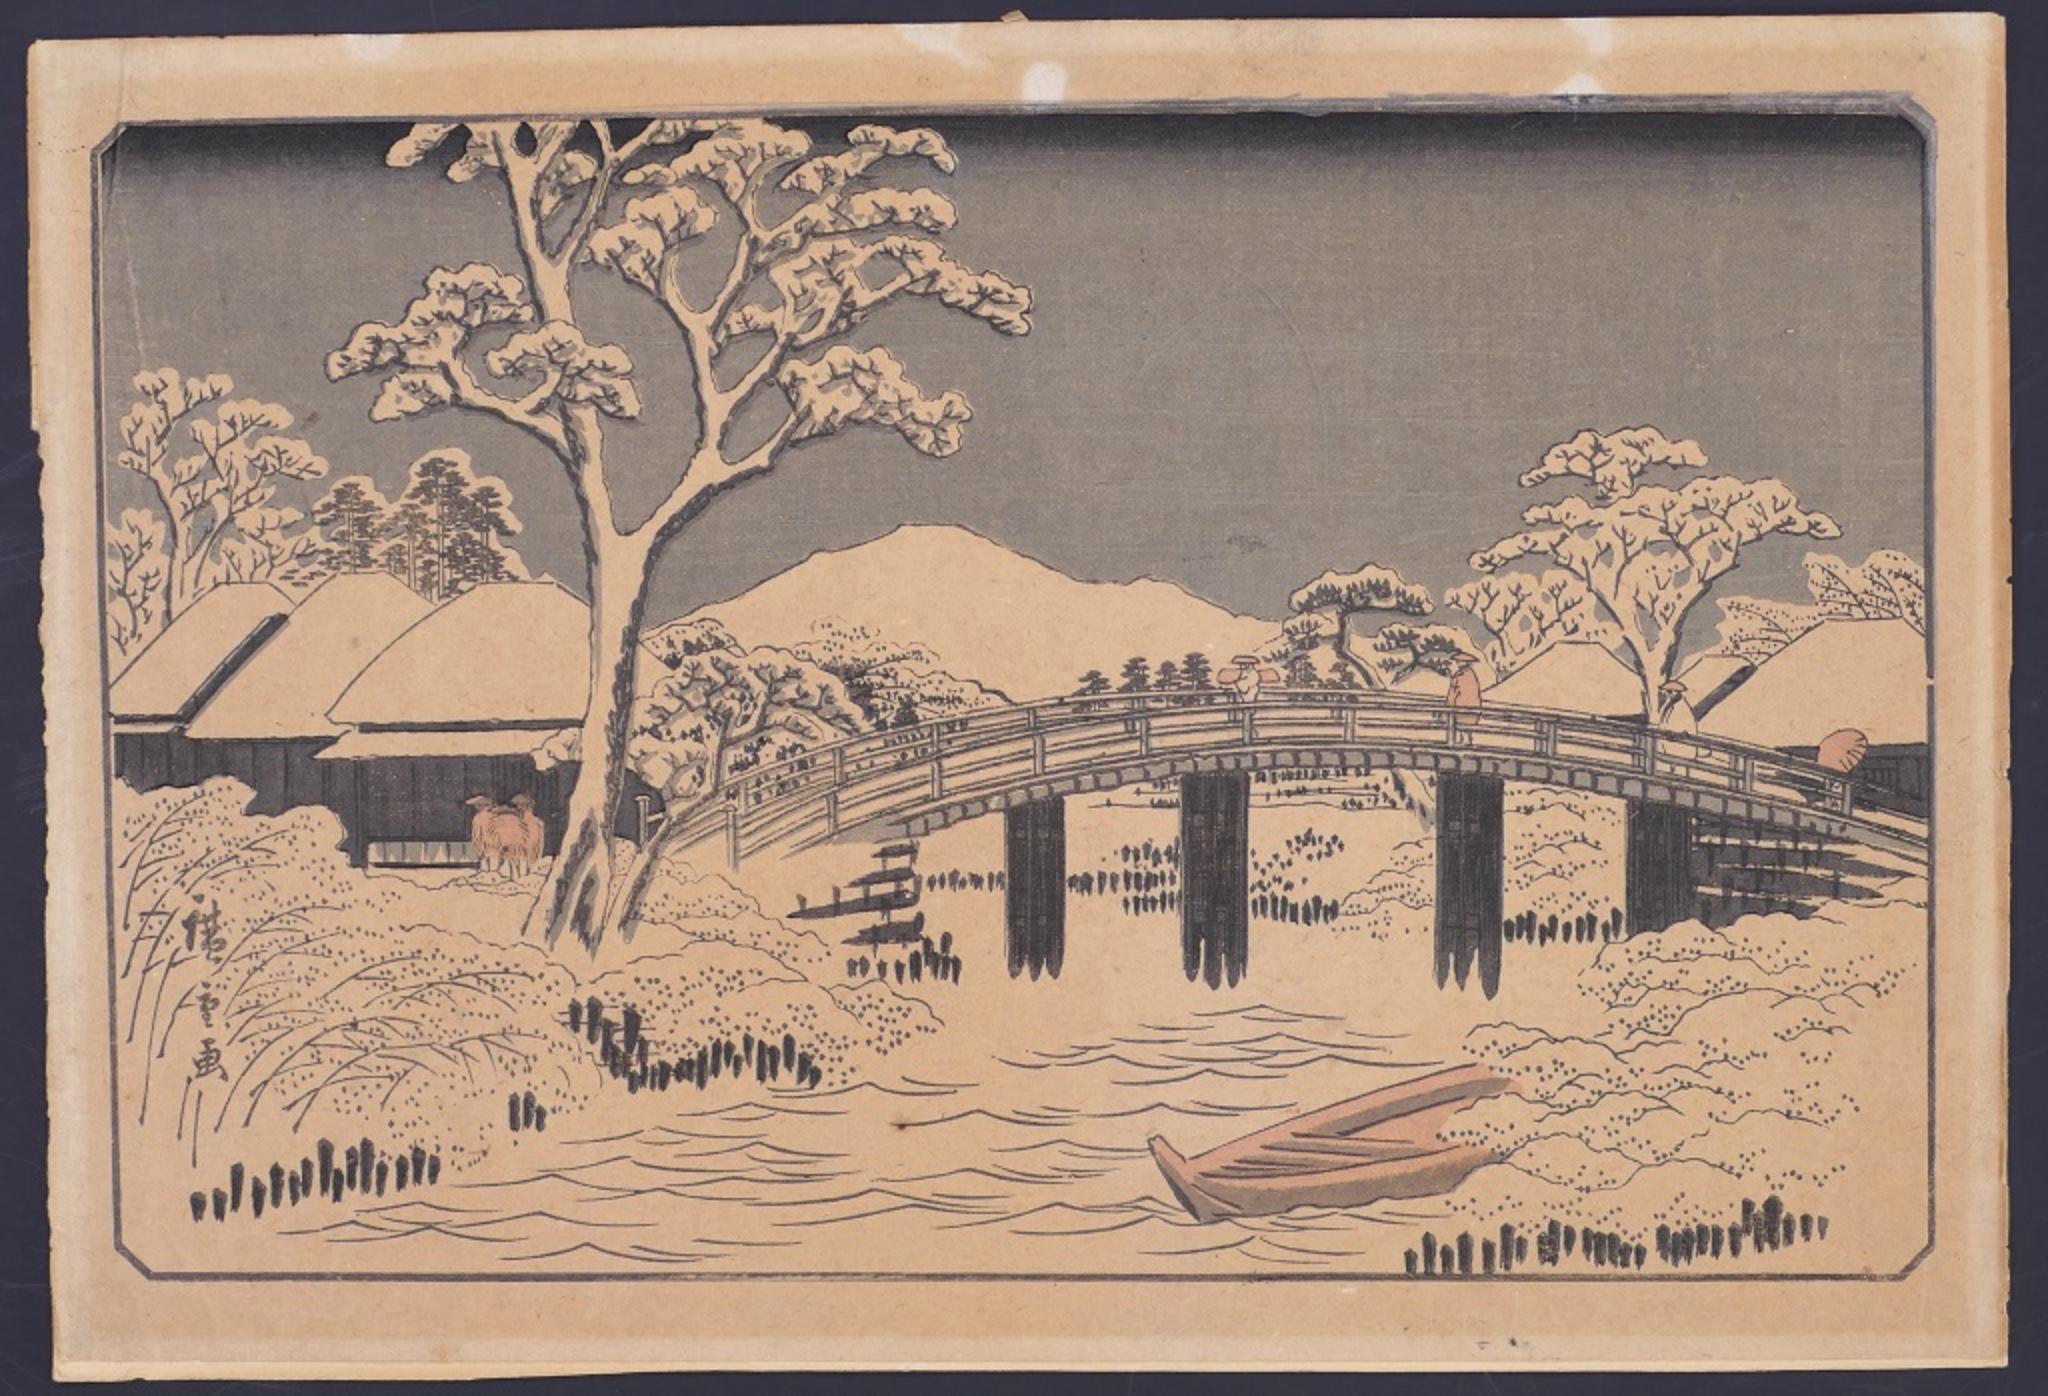 Hodogaya - Reisho Tokaidodate is a beautiful color woodcut print on paper, the plate n. 5, from the series “Fifty-three Stations of the Tokaido (Tokaido gojusan tsugi),” also known as the Reisho TokaidoDate, designed by the ukiyo-e master Utagawa